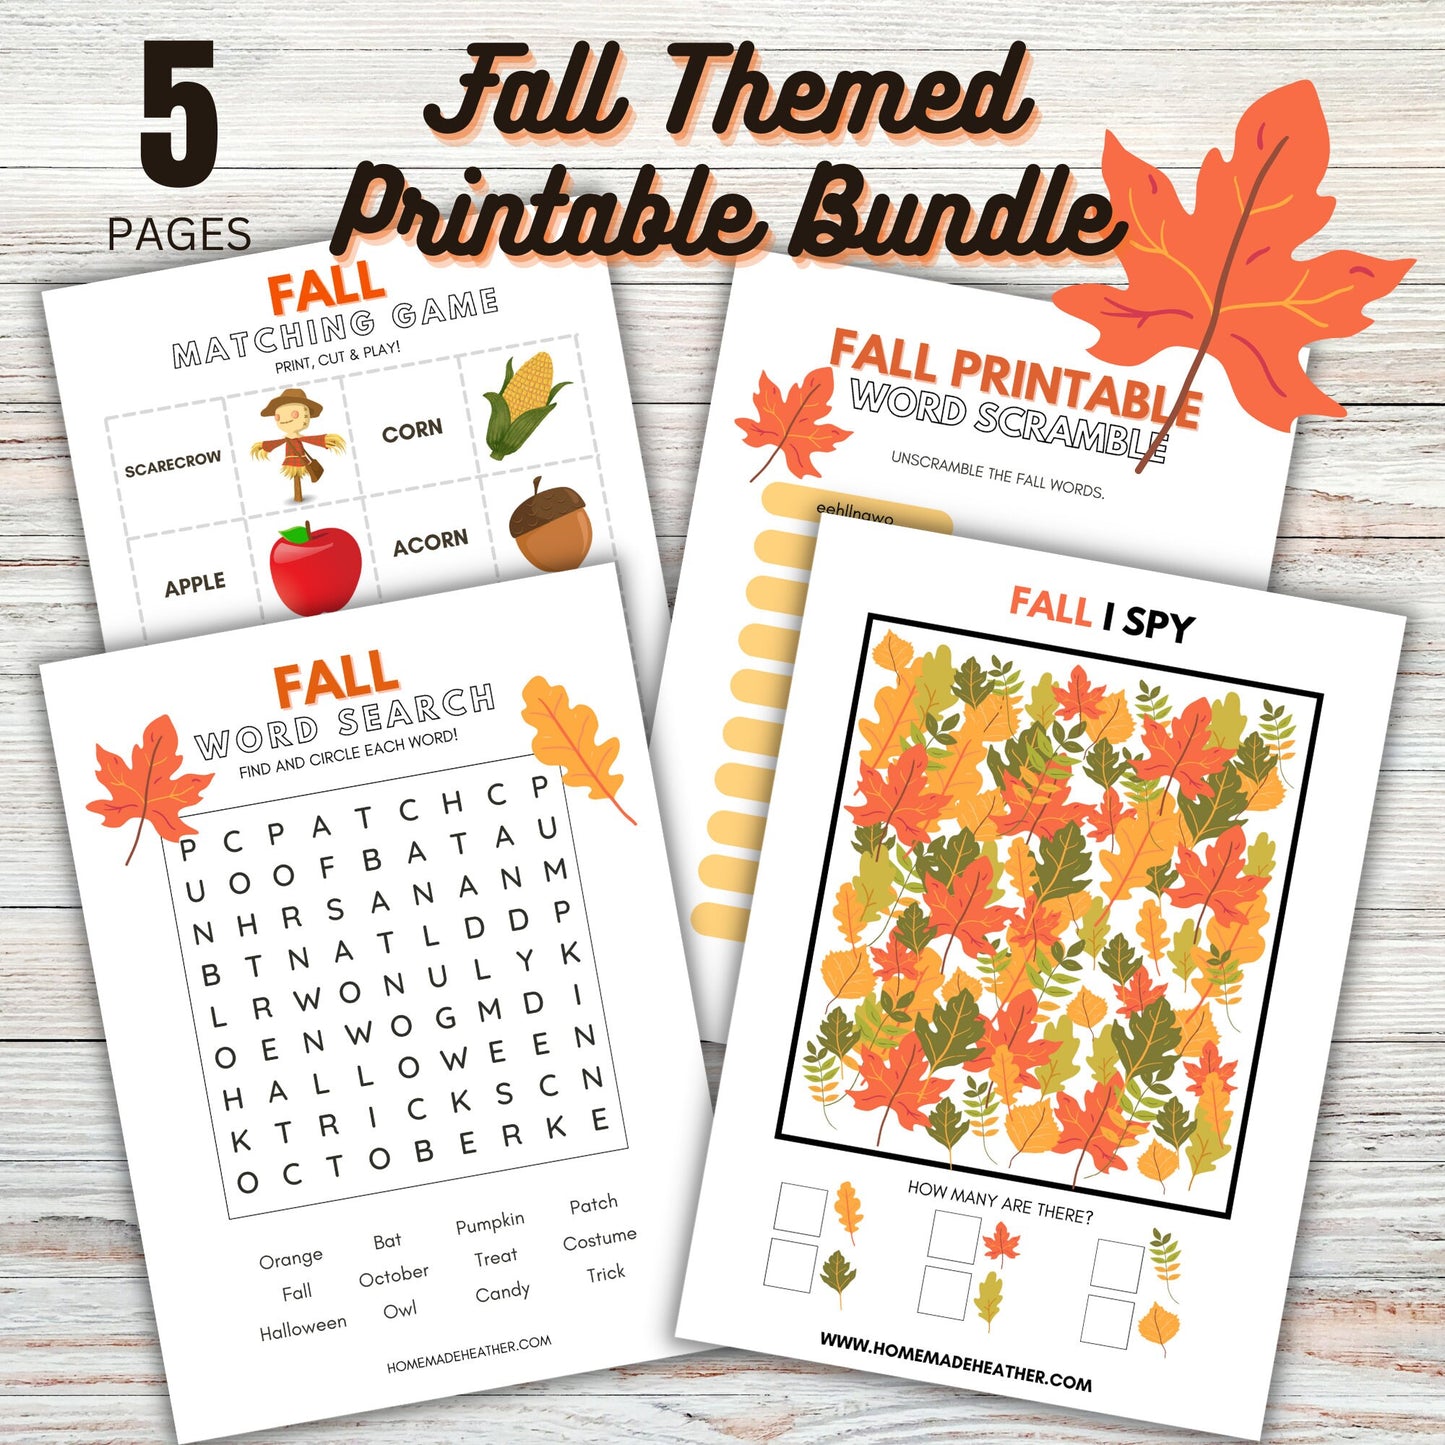 Fall Themed Printable Bundle - Fall Themed Bundle Printable PDF - Instant Download